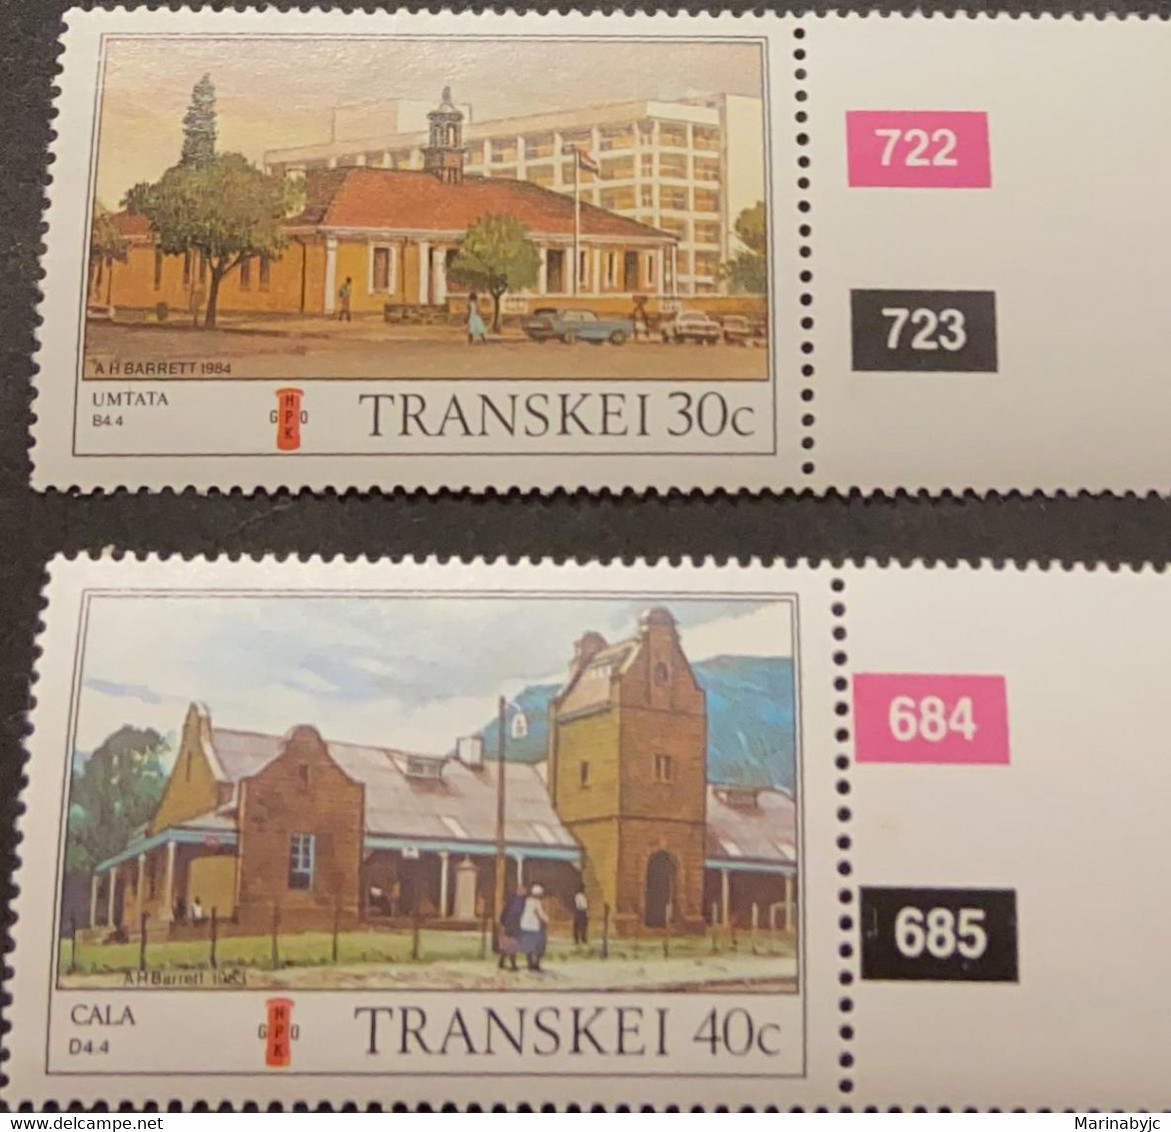 M) 1984, SOUTH AFRICA, TRANSKEI, TRANSKEI POST OFFICES, AH BARRETT, UMTATA, CALA - Transkei